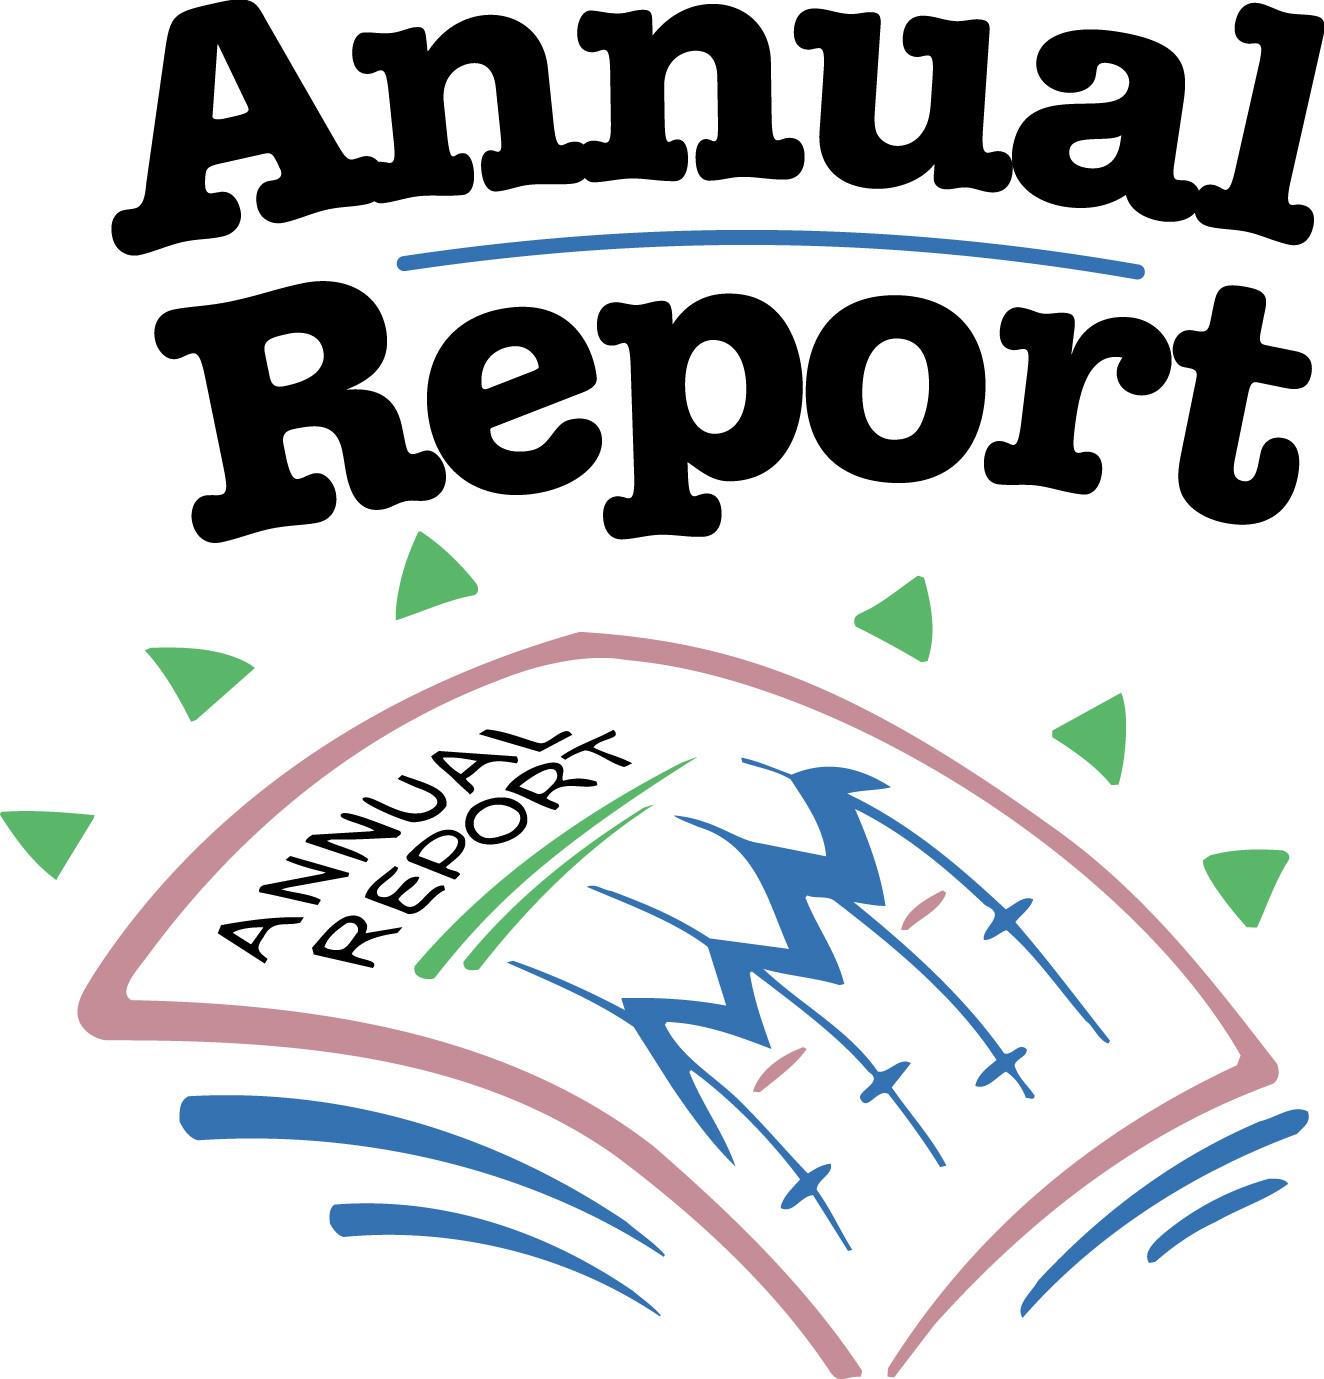 report clipart annual report